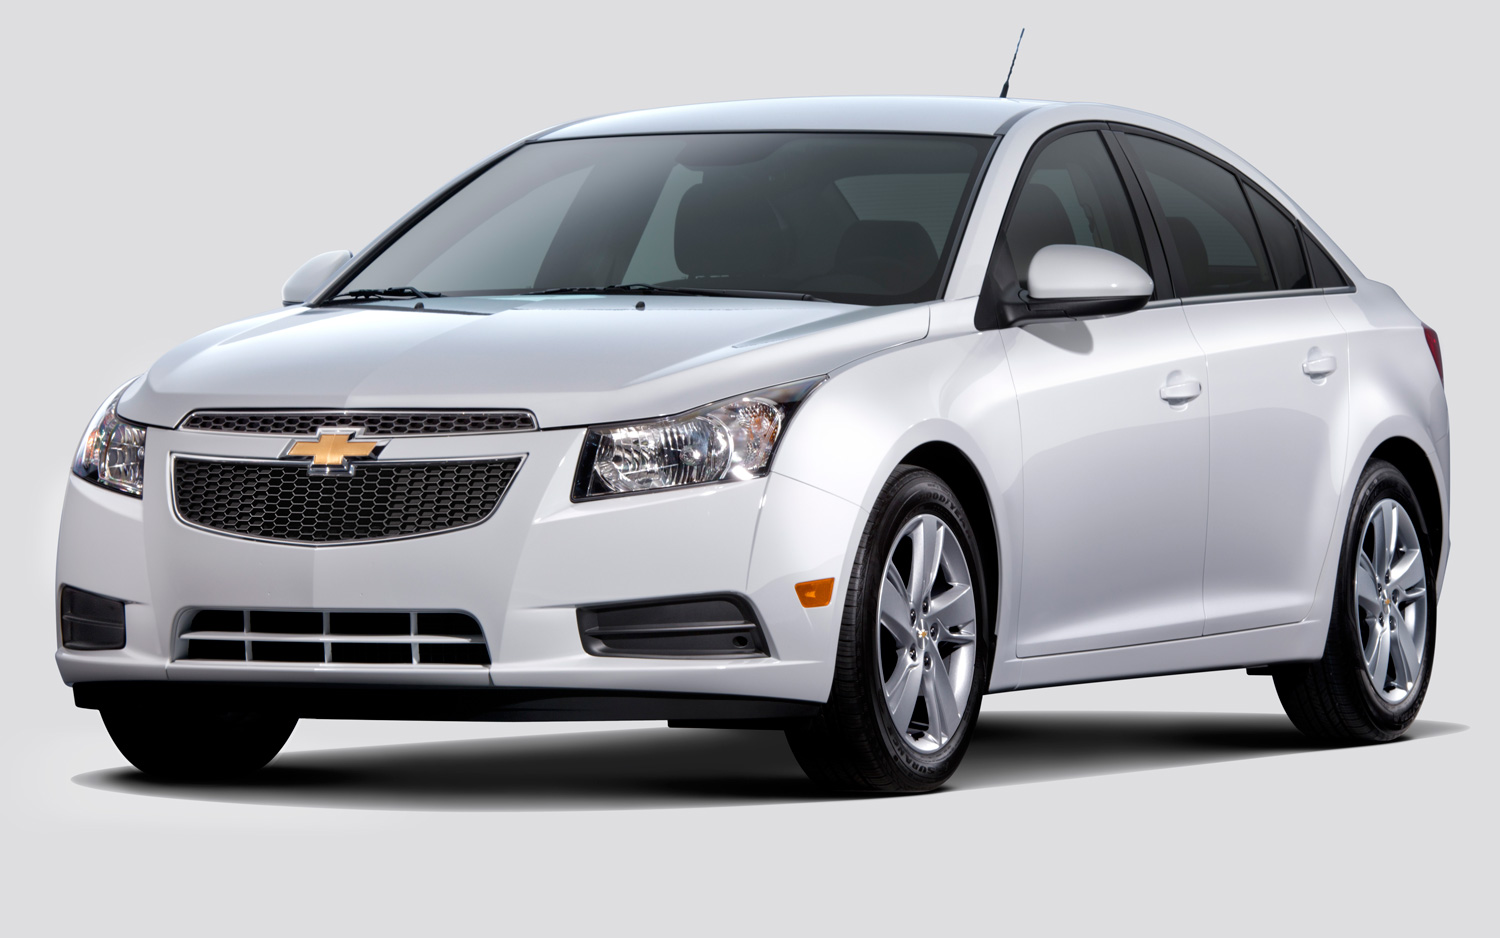 2014 Chevrolet Cruze 2.0TD  New cars reviews